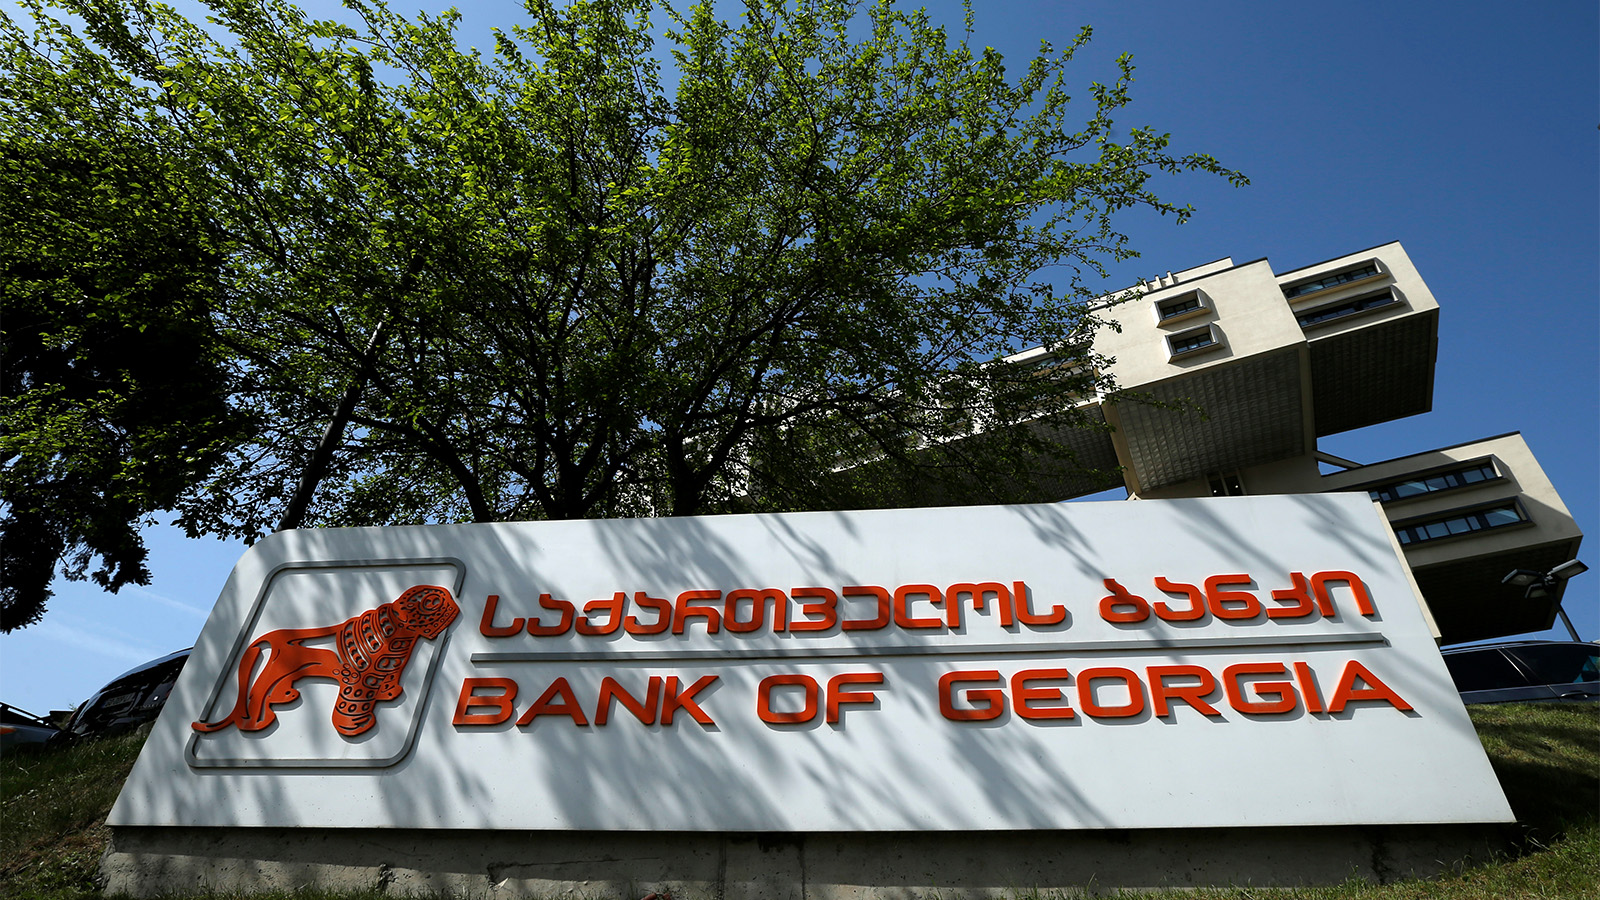  Bank of Georgia        